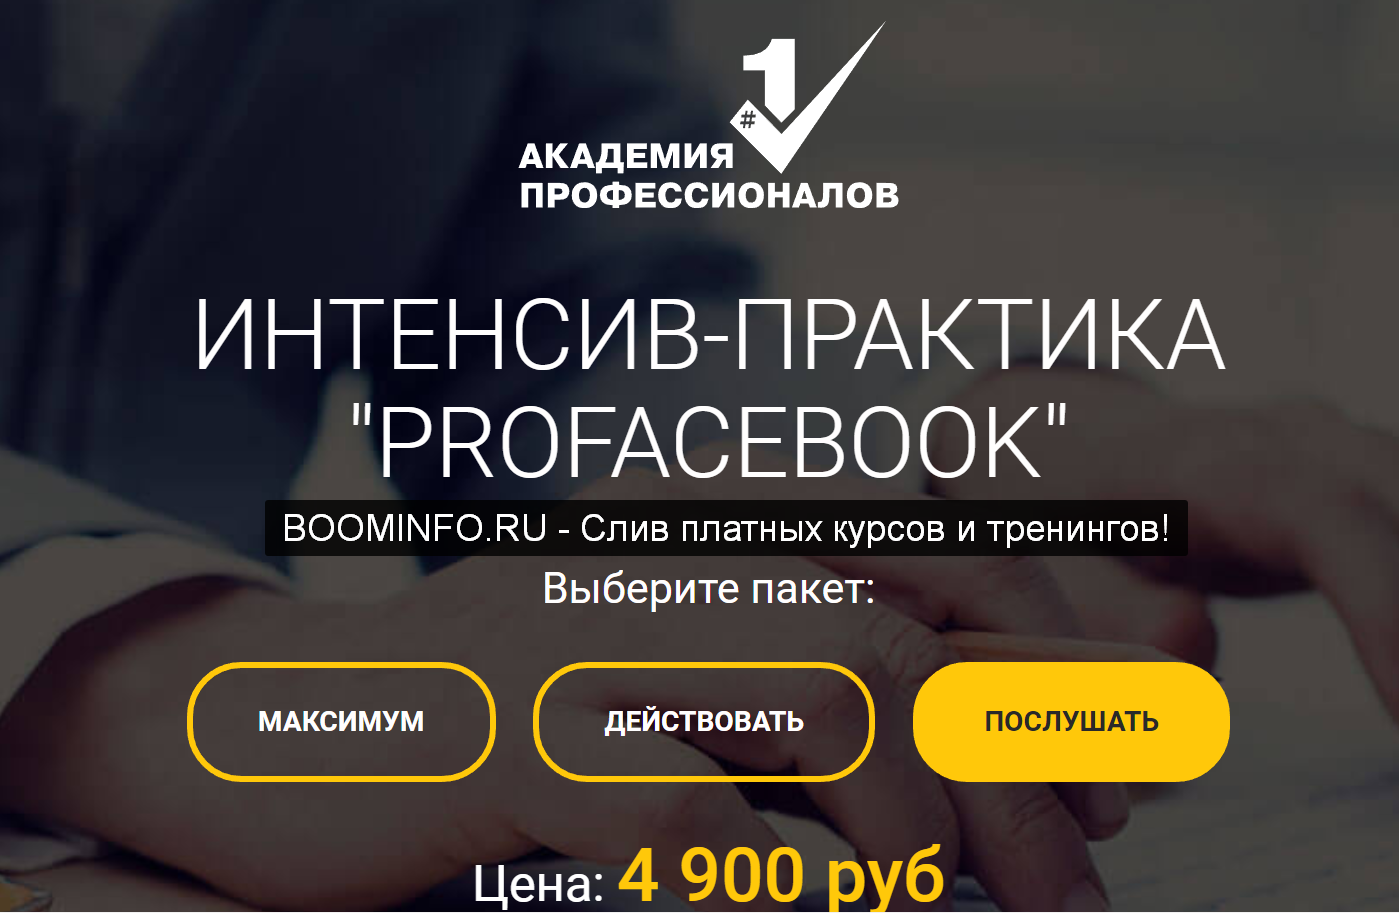 vladimir-belozerov-profacebook-2019-png.745